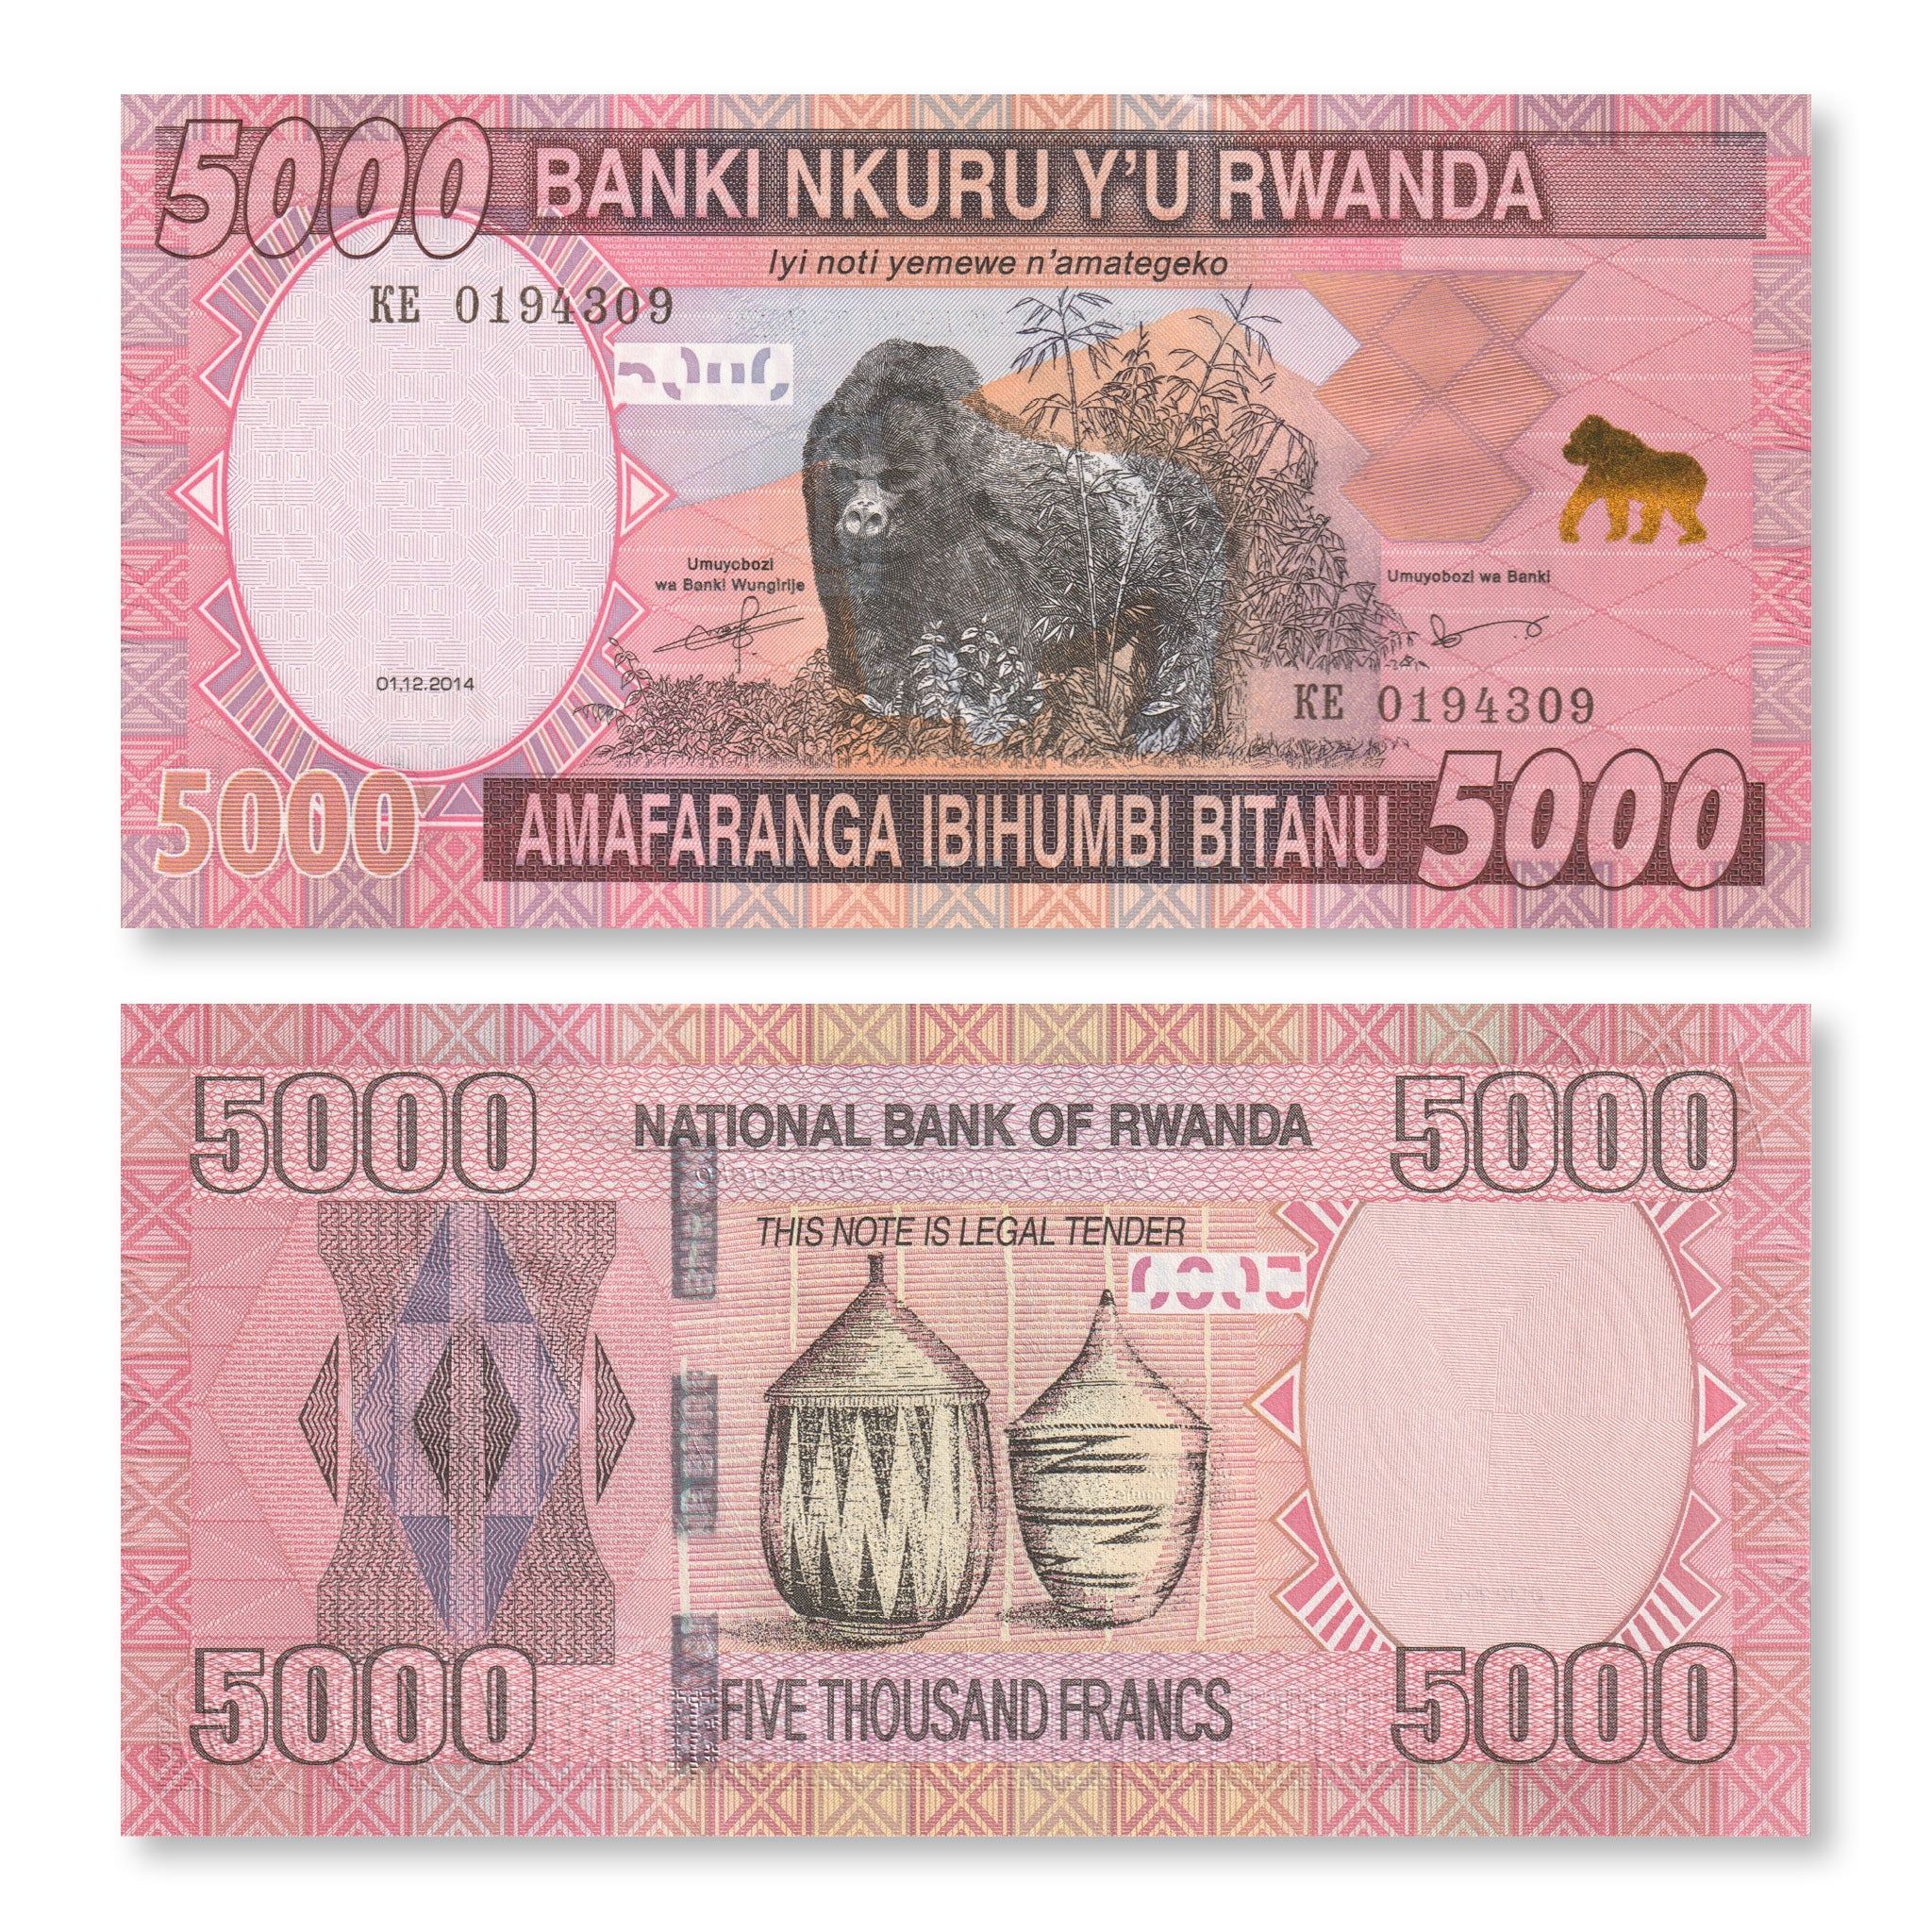 Rwanda 5000 Francs, 2014, B140a, P41, UNC - Robert's World Money - World Banknotes